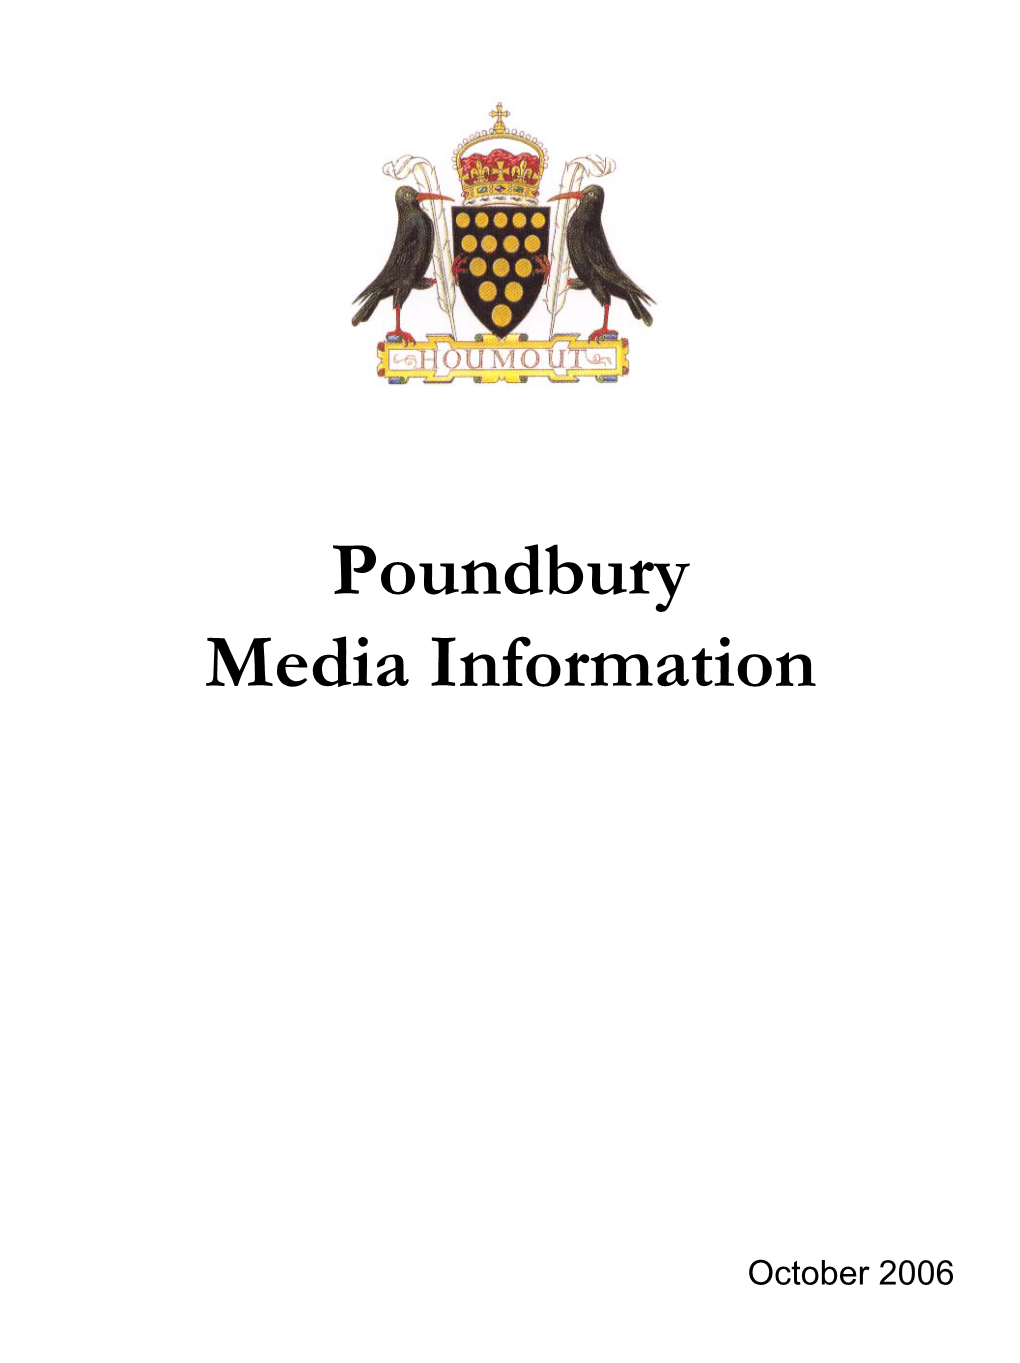 Poundbury Fact Sheet